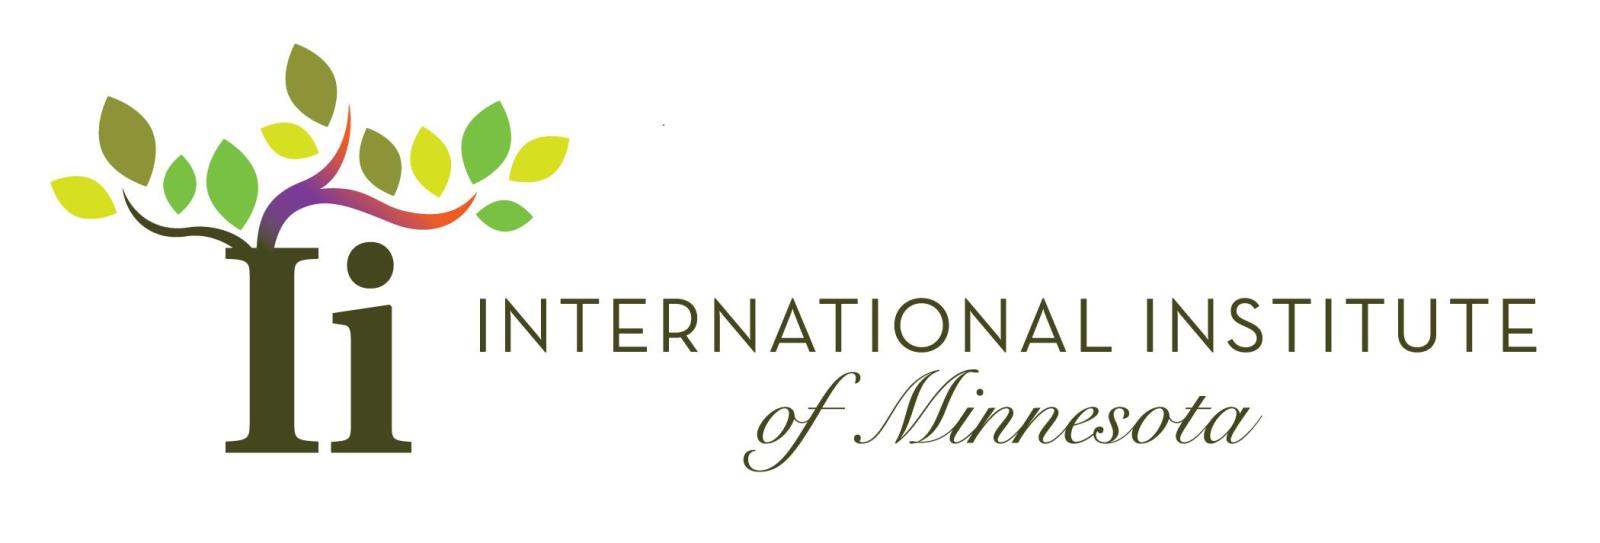 International Institute of Minnesota Logo